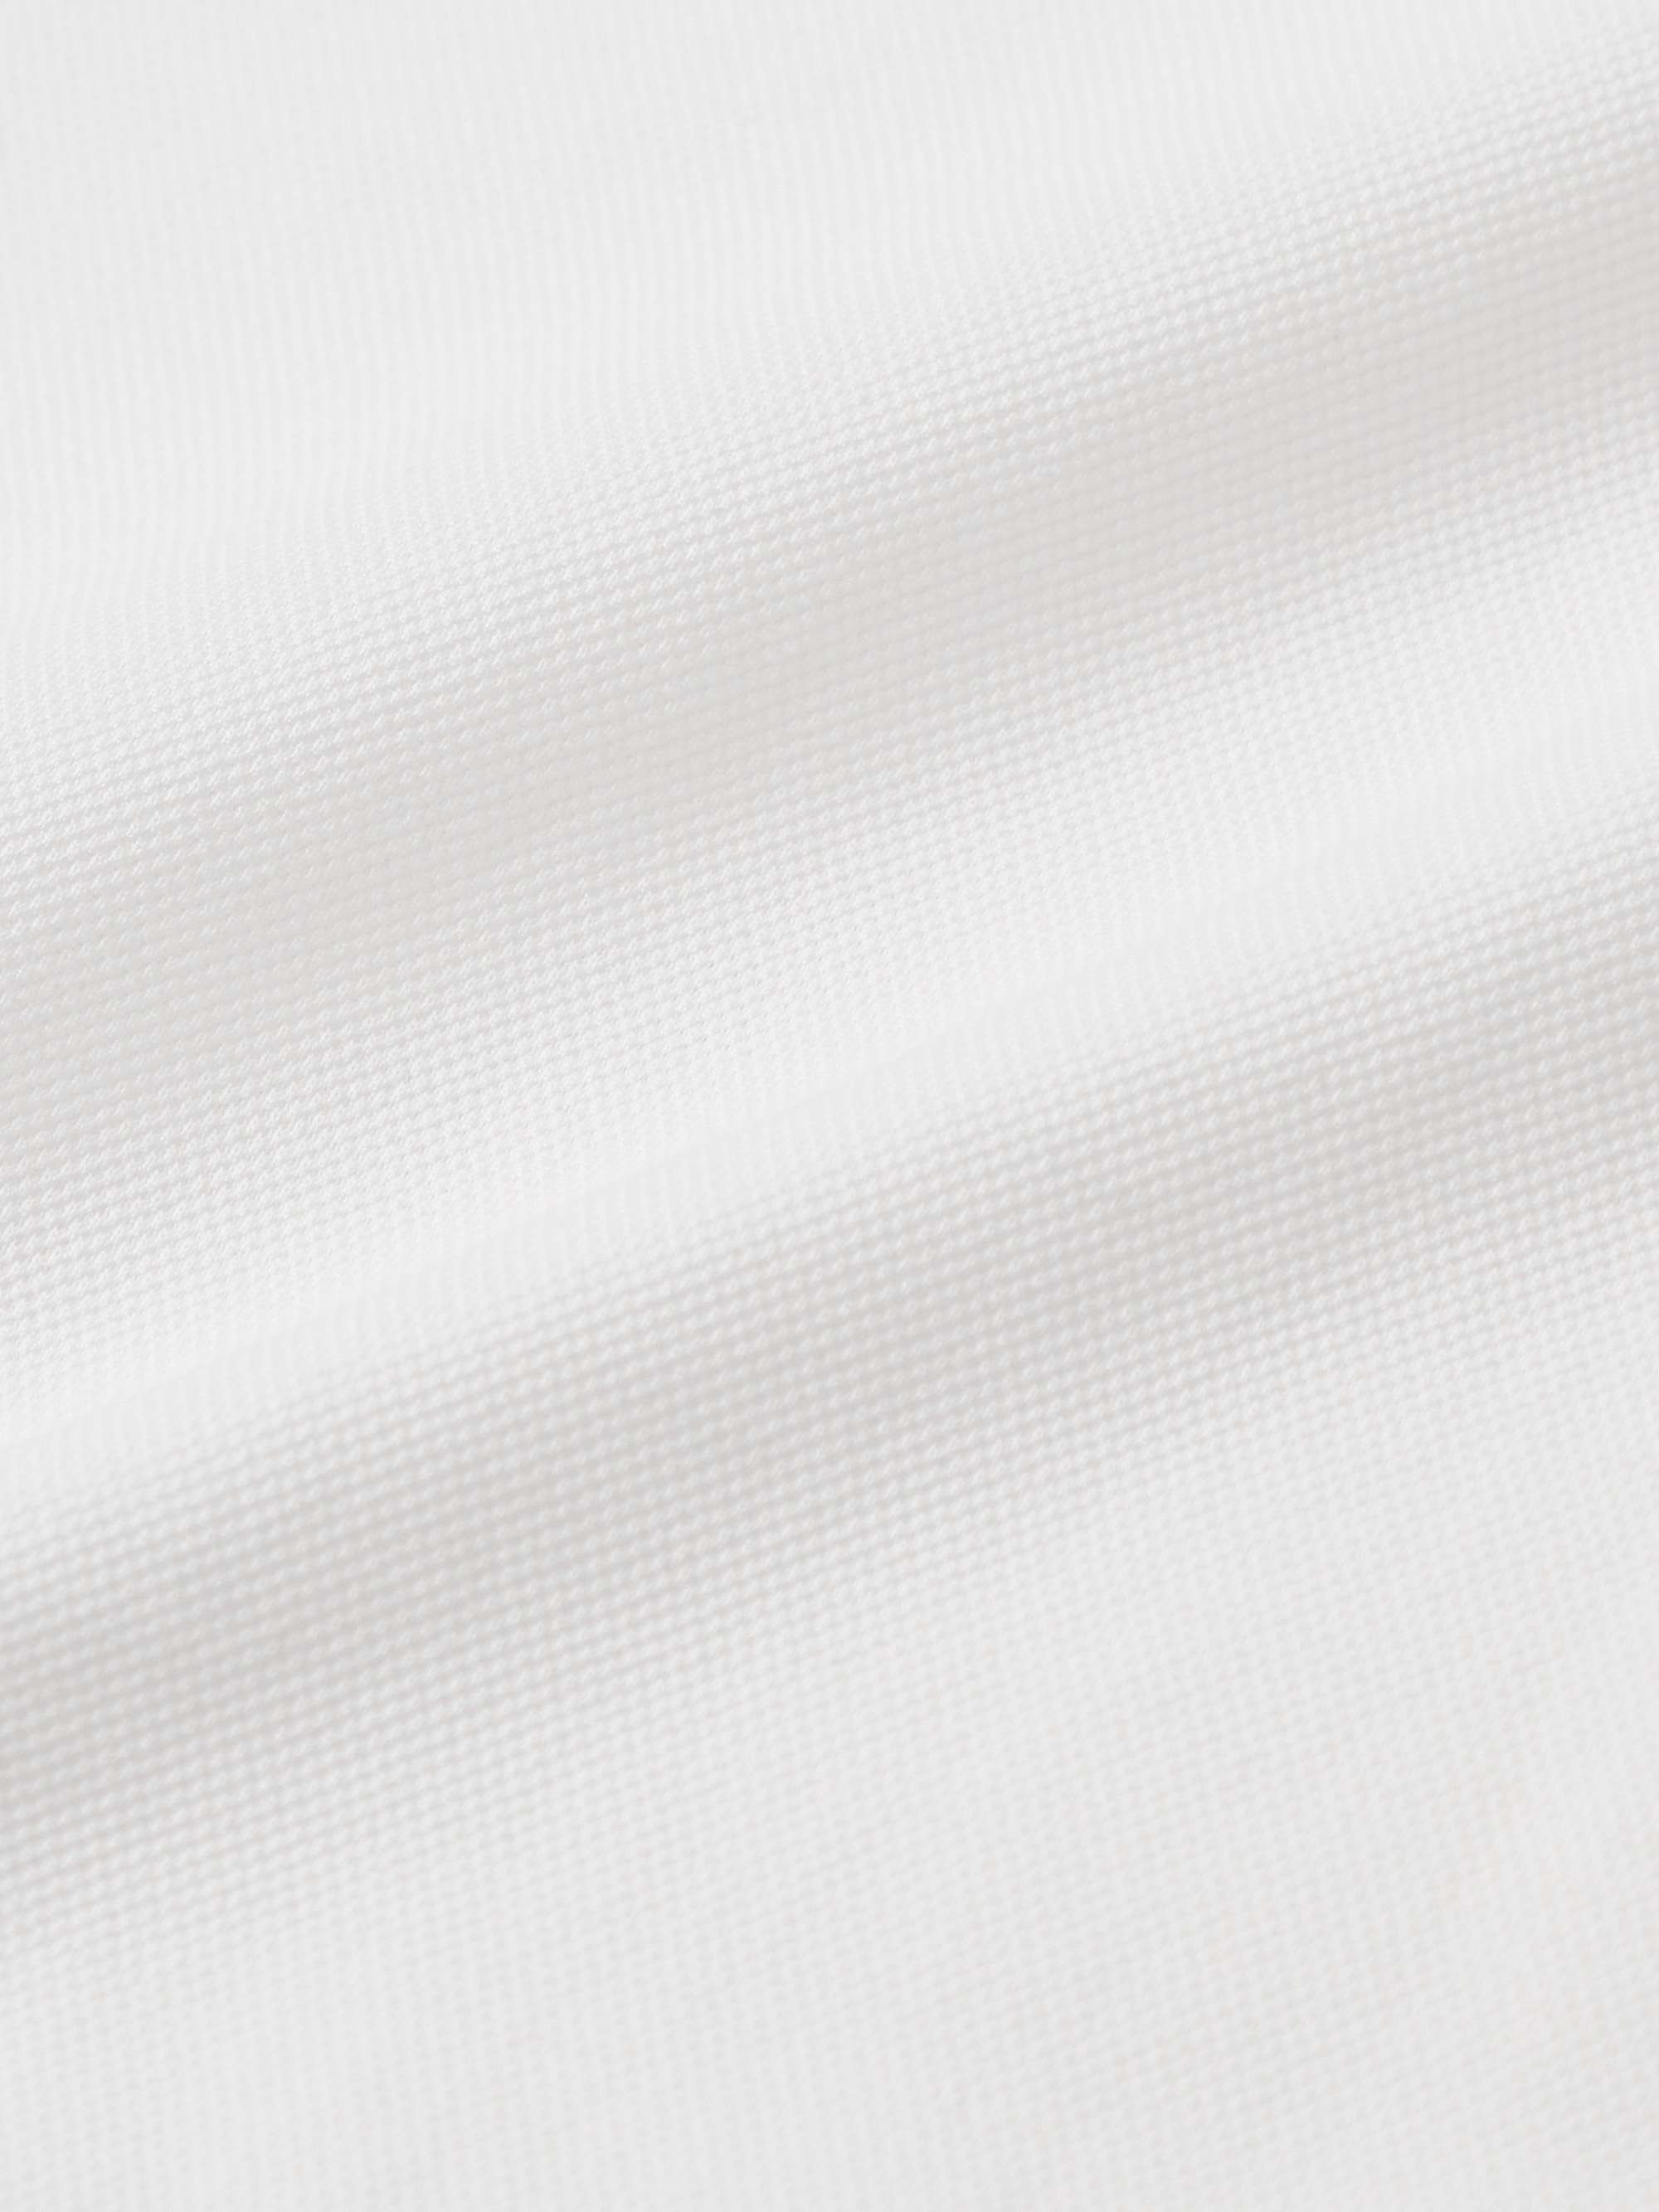 ZEGNA Cotton-Piqué Shirt